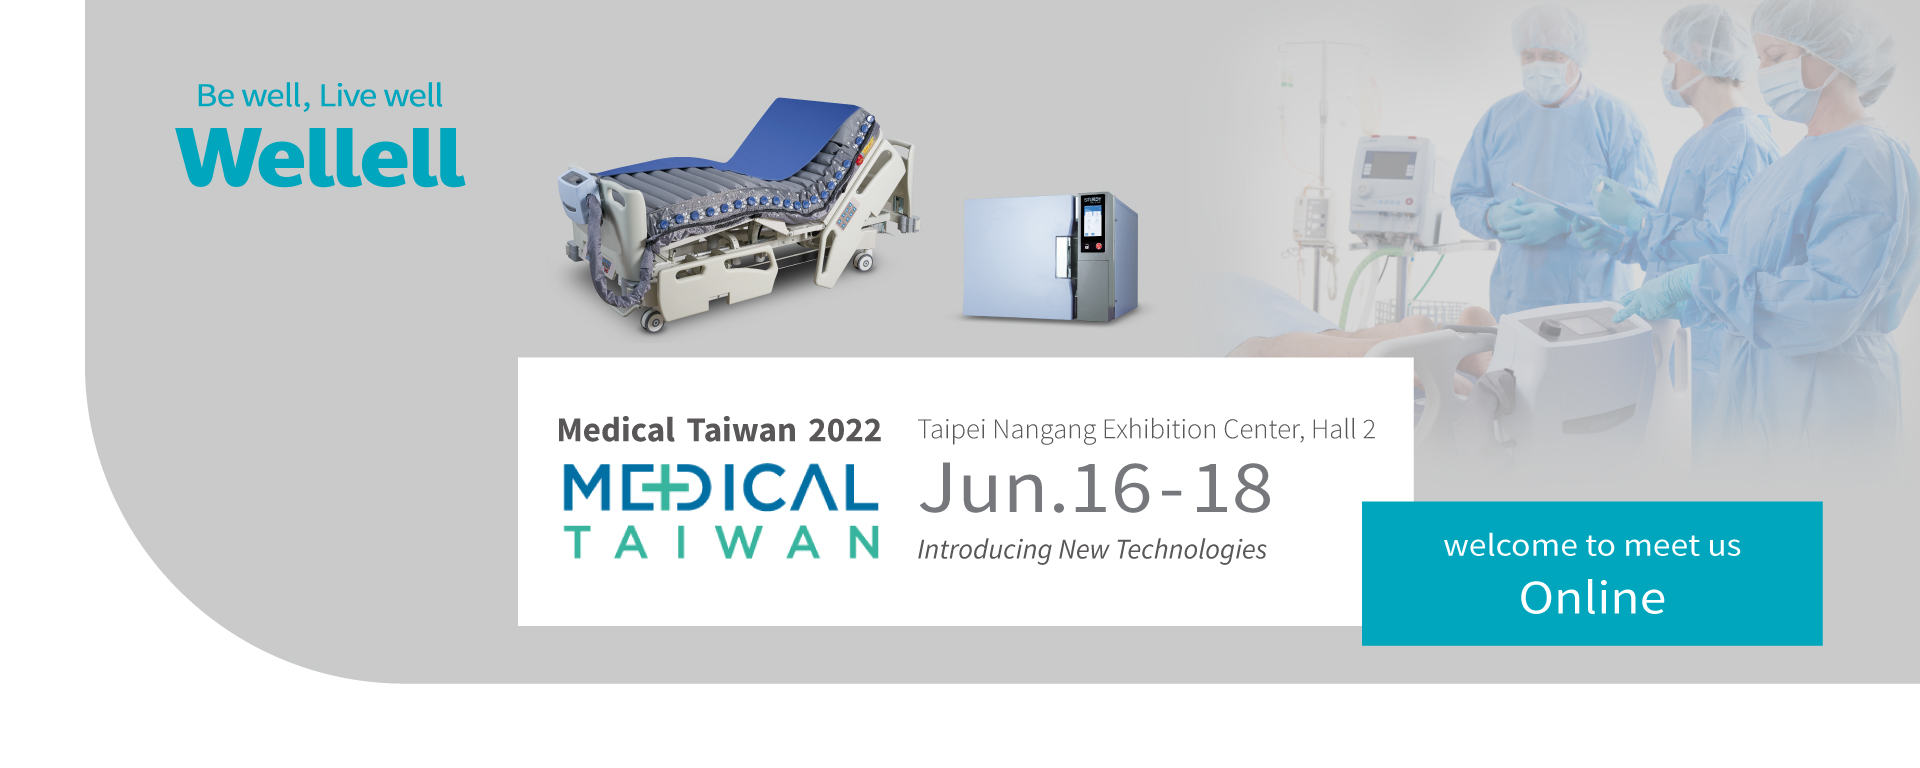 Medical-Taiwan-2022-Wellell